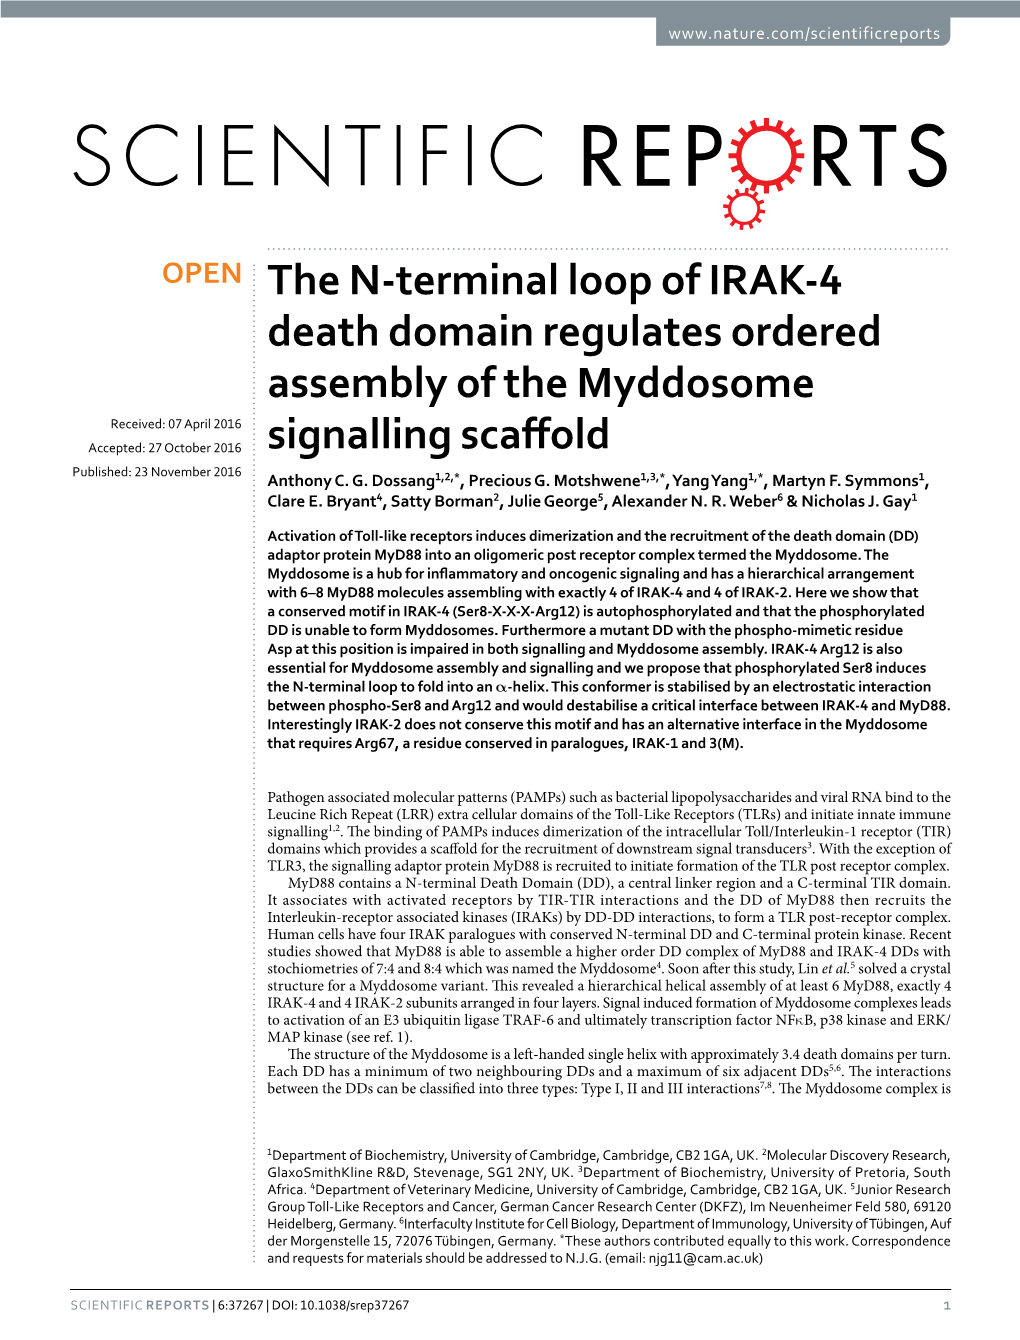 The N-Terminal Loop of IRAK-4 Death Domain Regulates Ordered